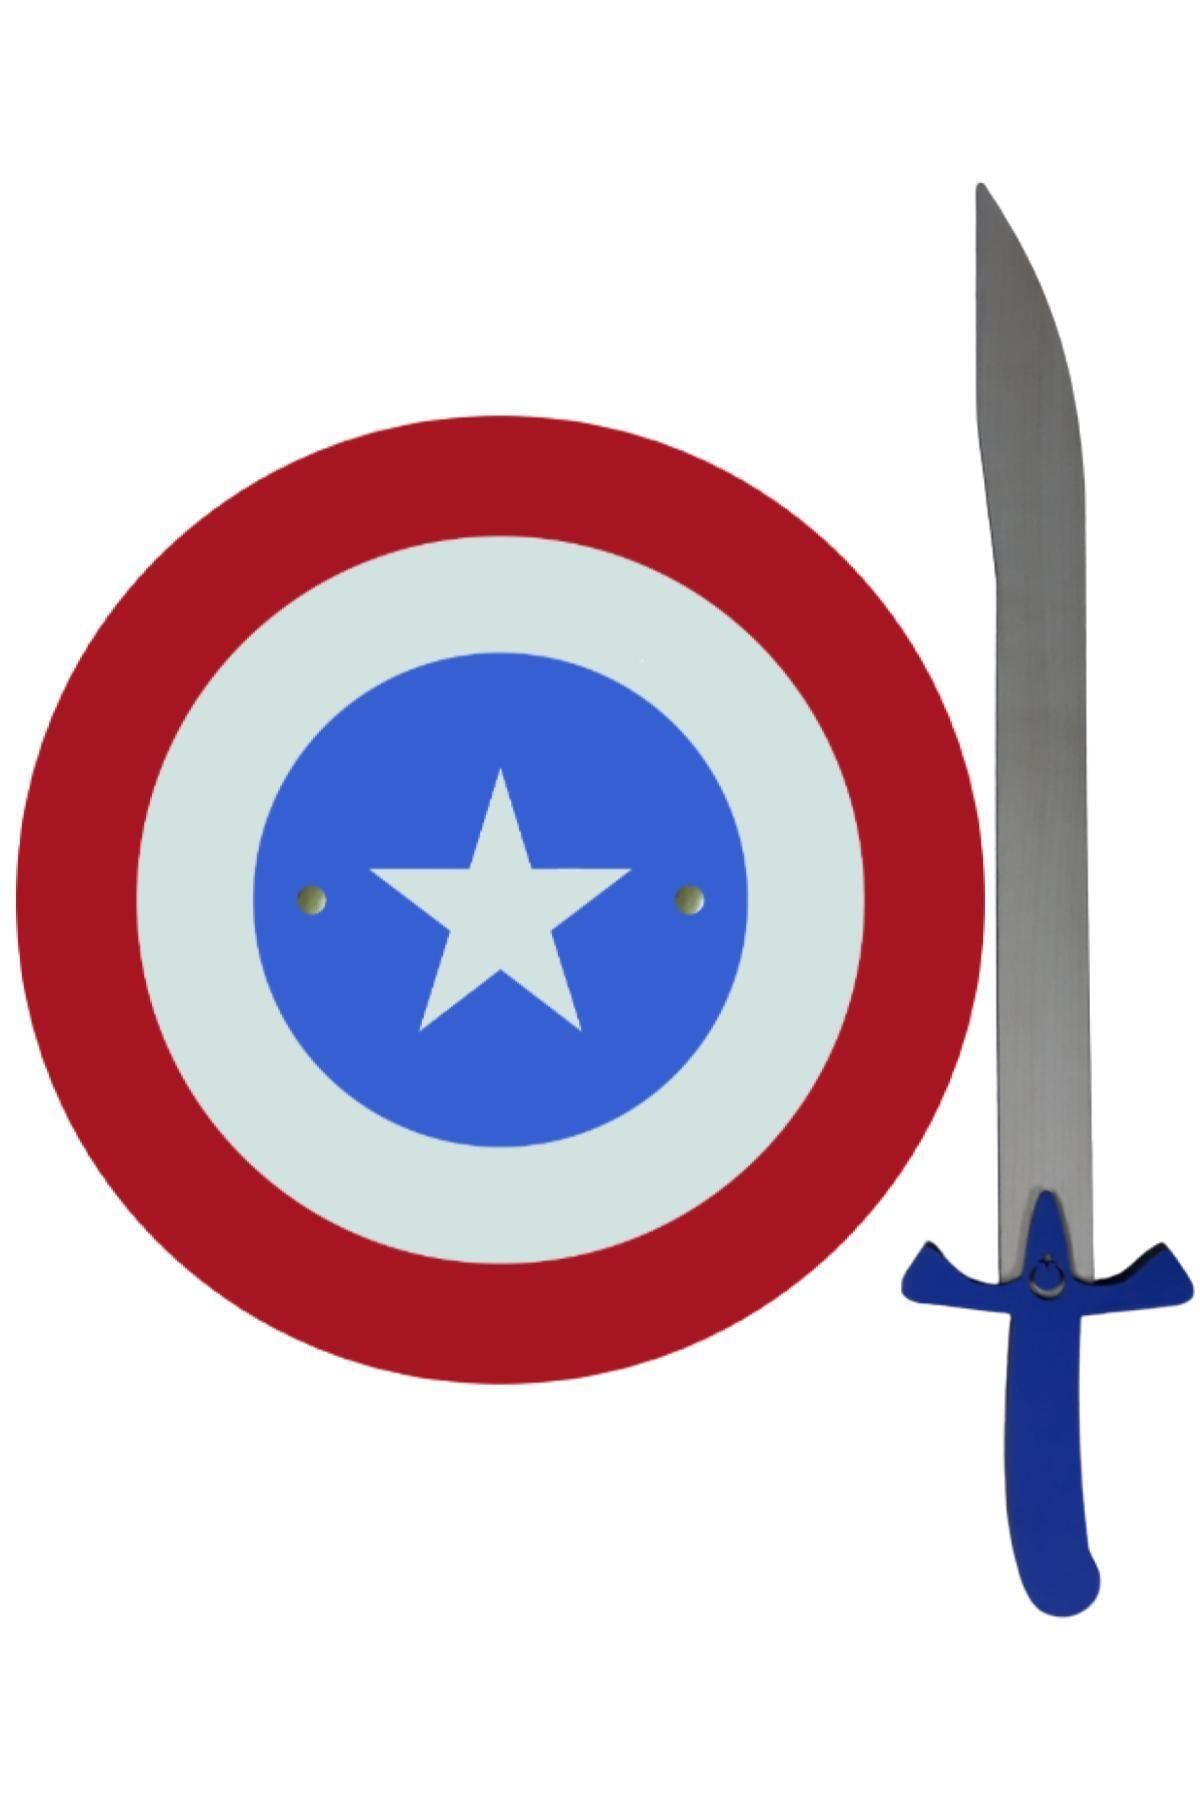 Ahtek Ahşap Oyuncak Seti 2'li Kaptan Amerika Kalkan ve Mavi Kılıç